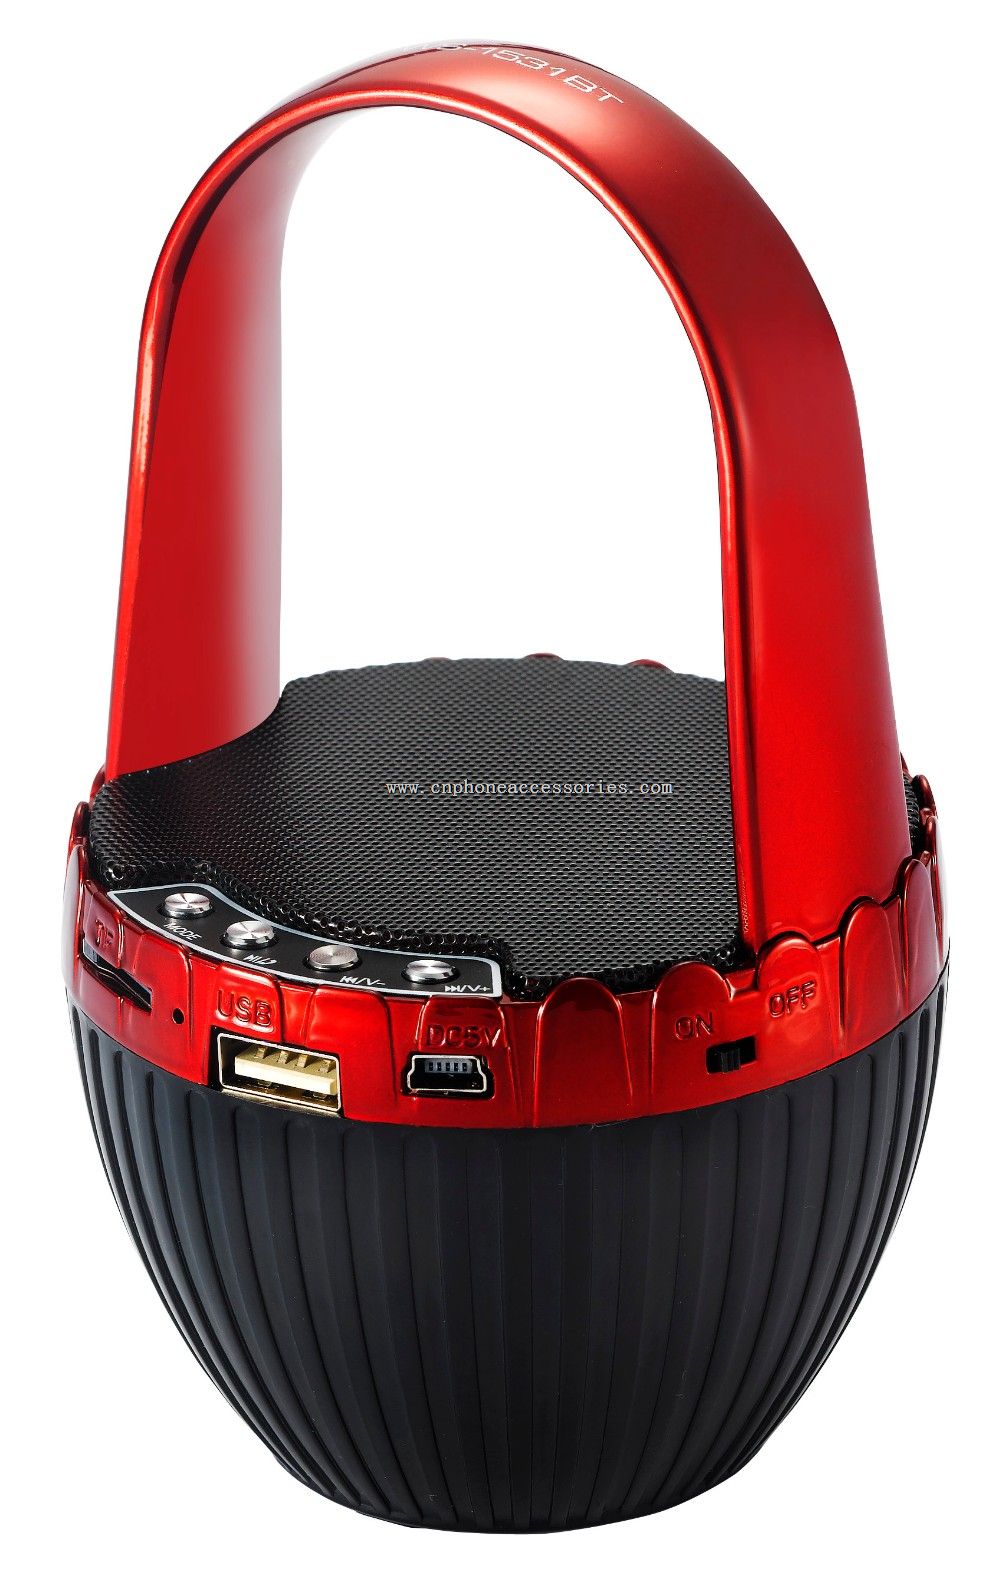 mini bluetooth speaker with multi-color